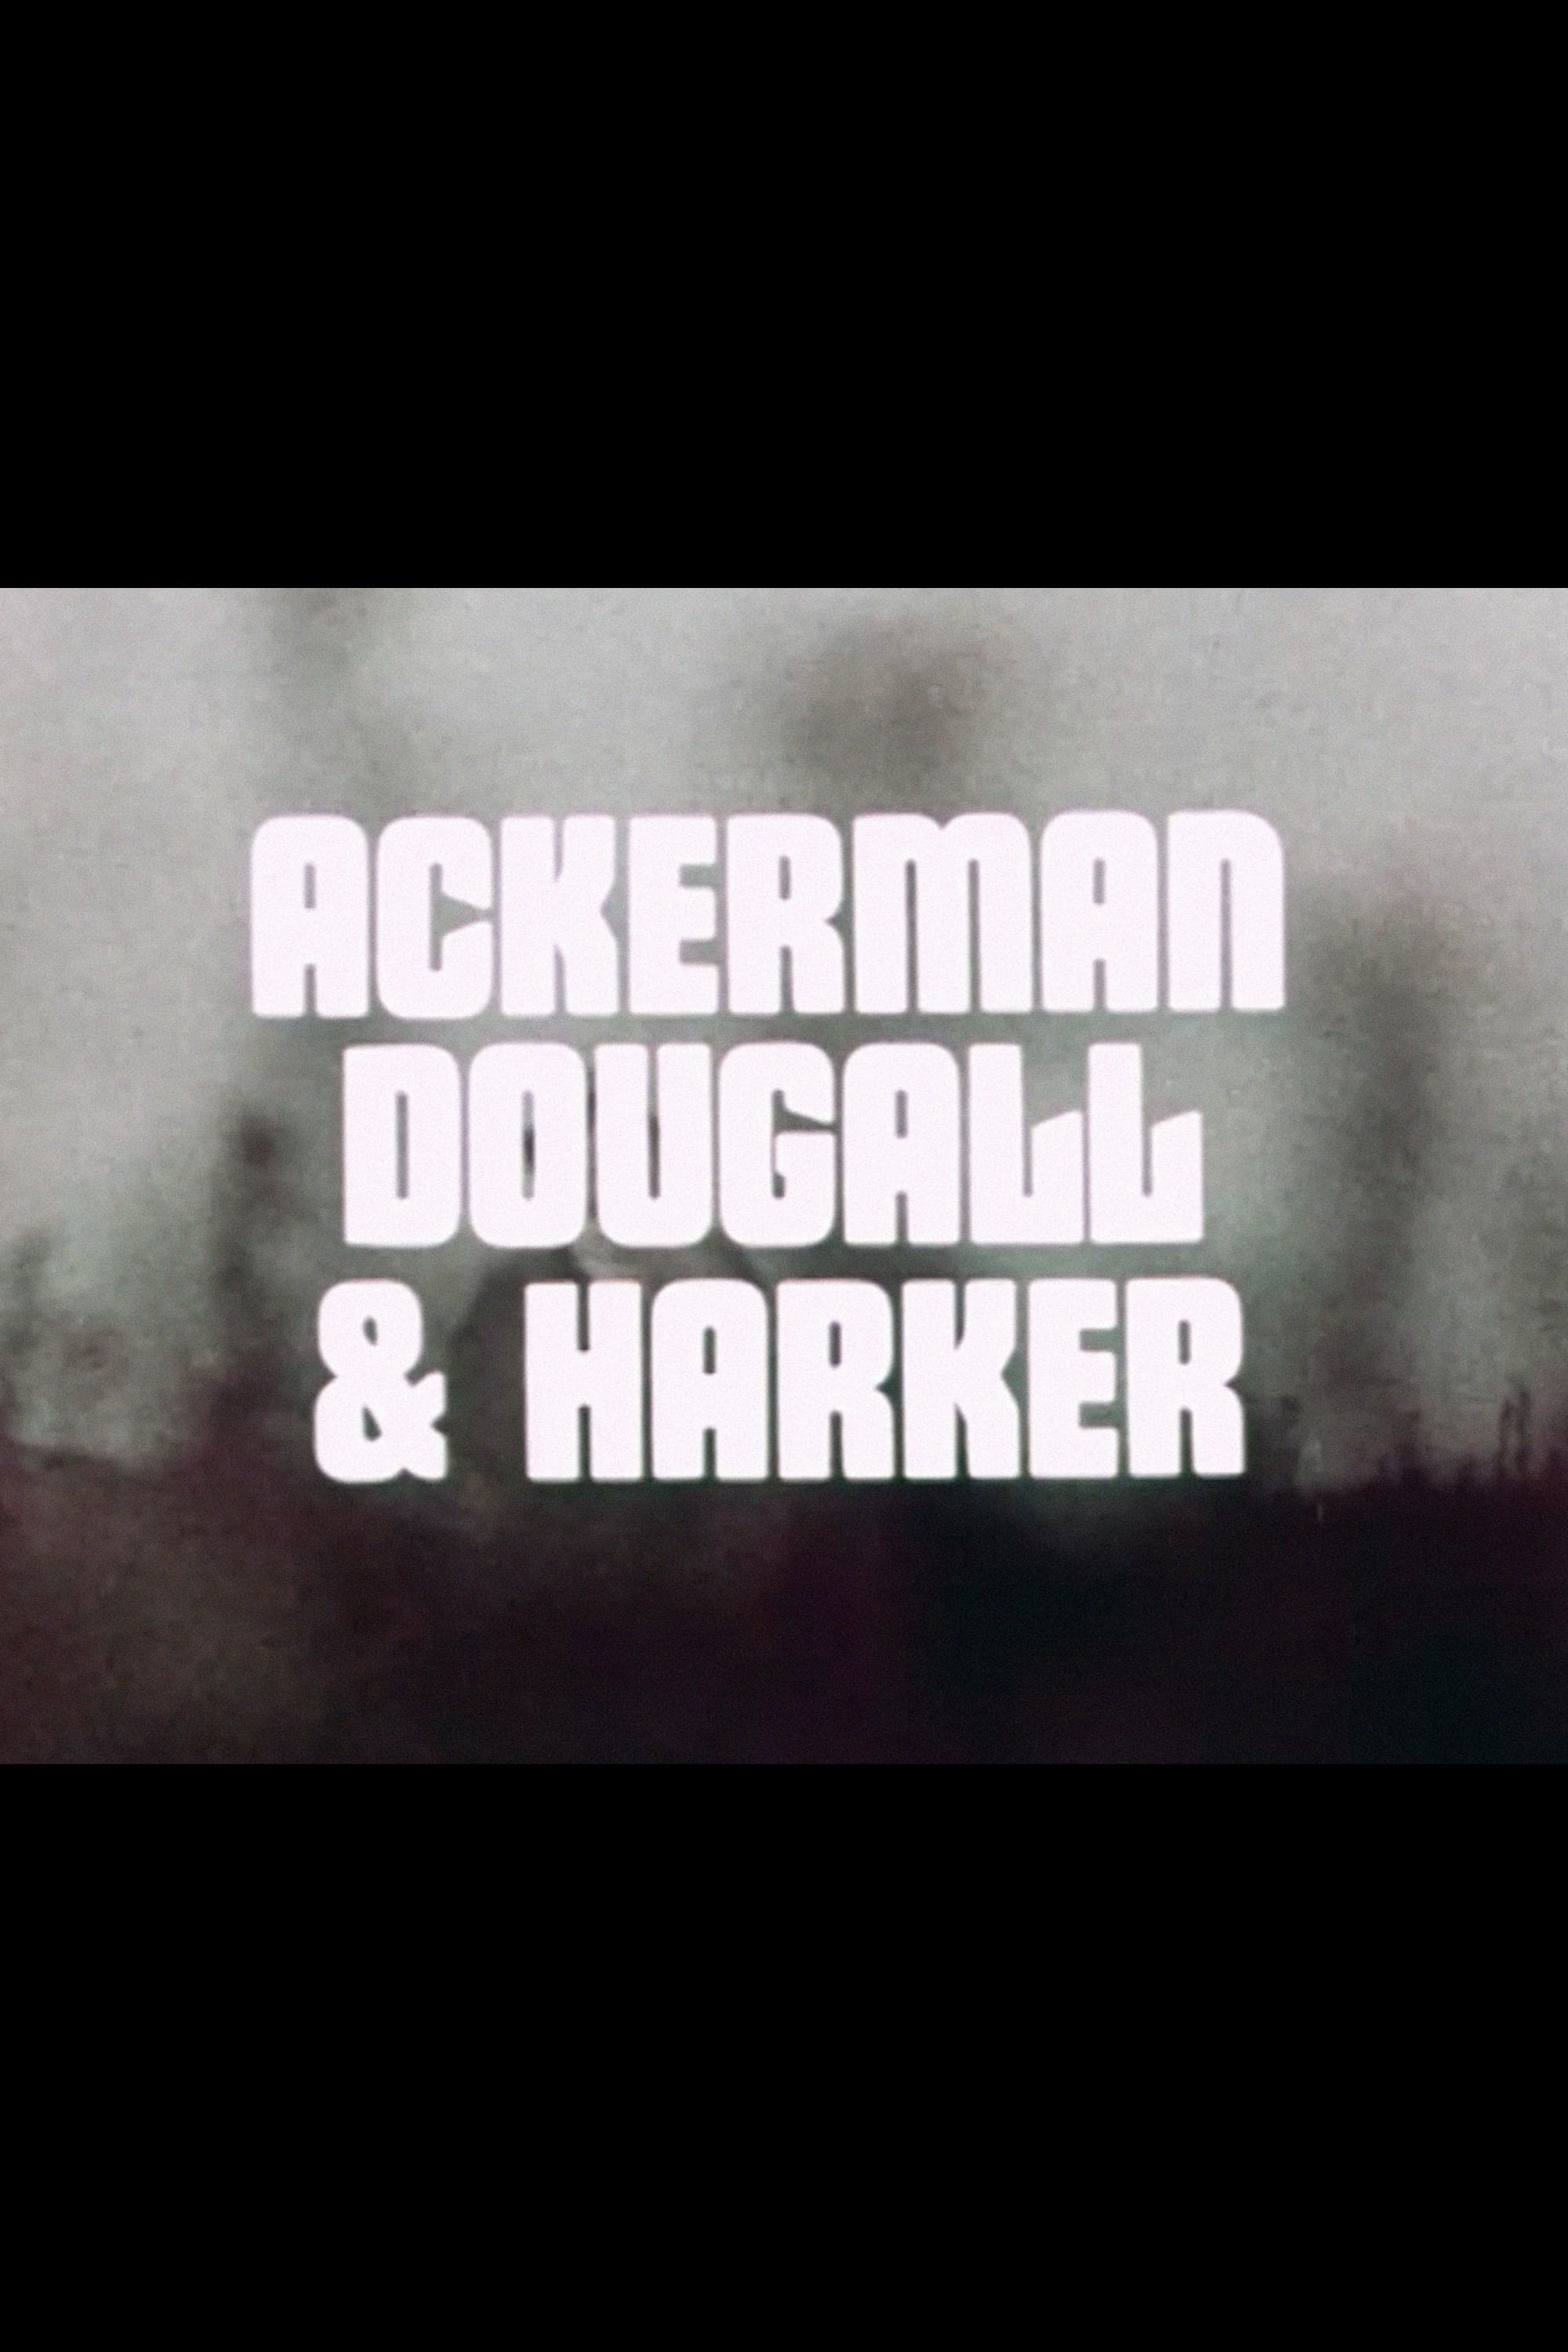 Ackerman, Dougall & Harker